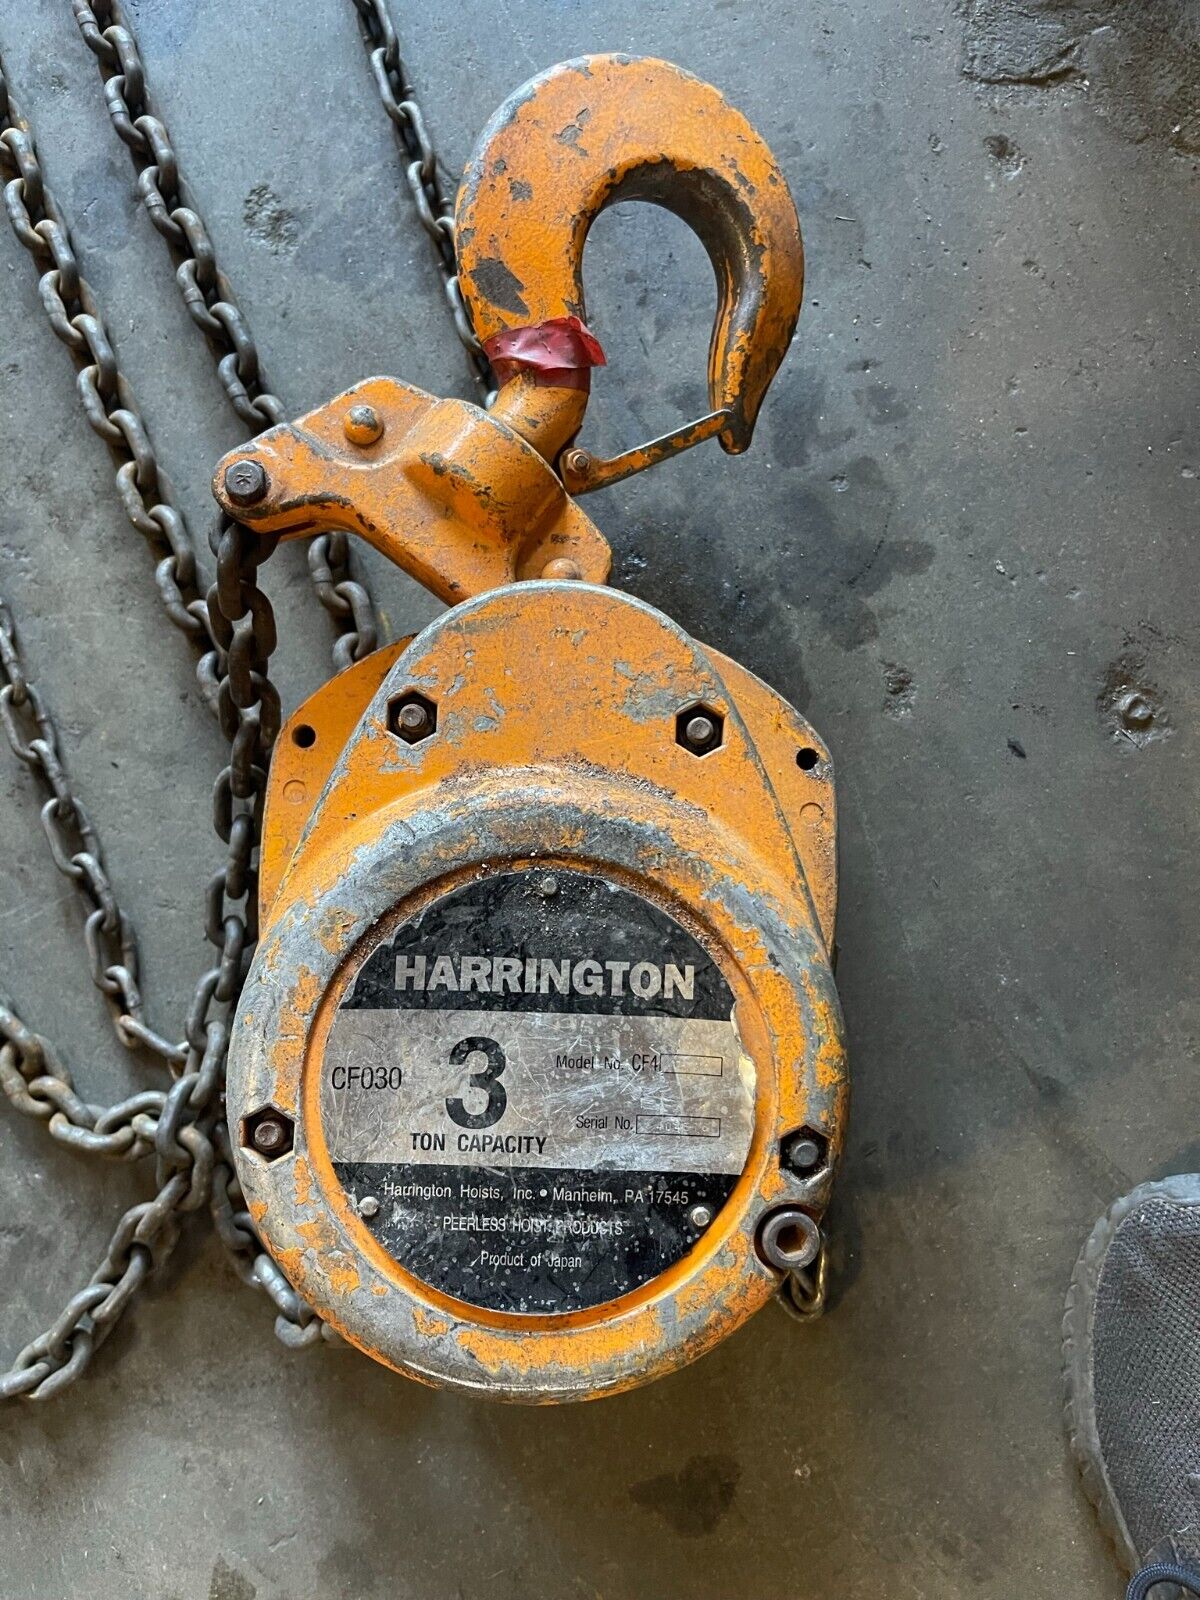 Manual Chain Hoist Harrington CF4 3 ton, 15 foot Lift Used Fair Condition